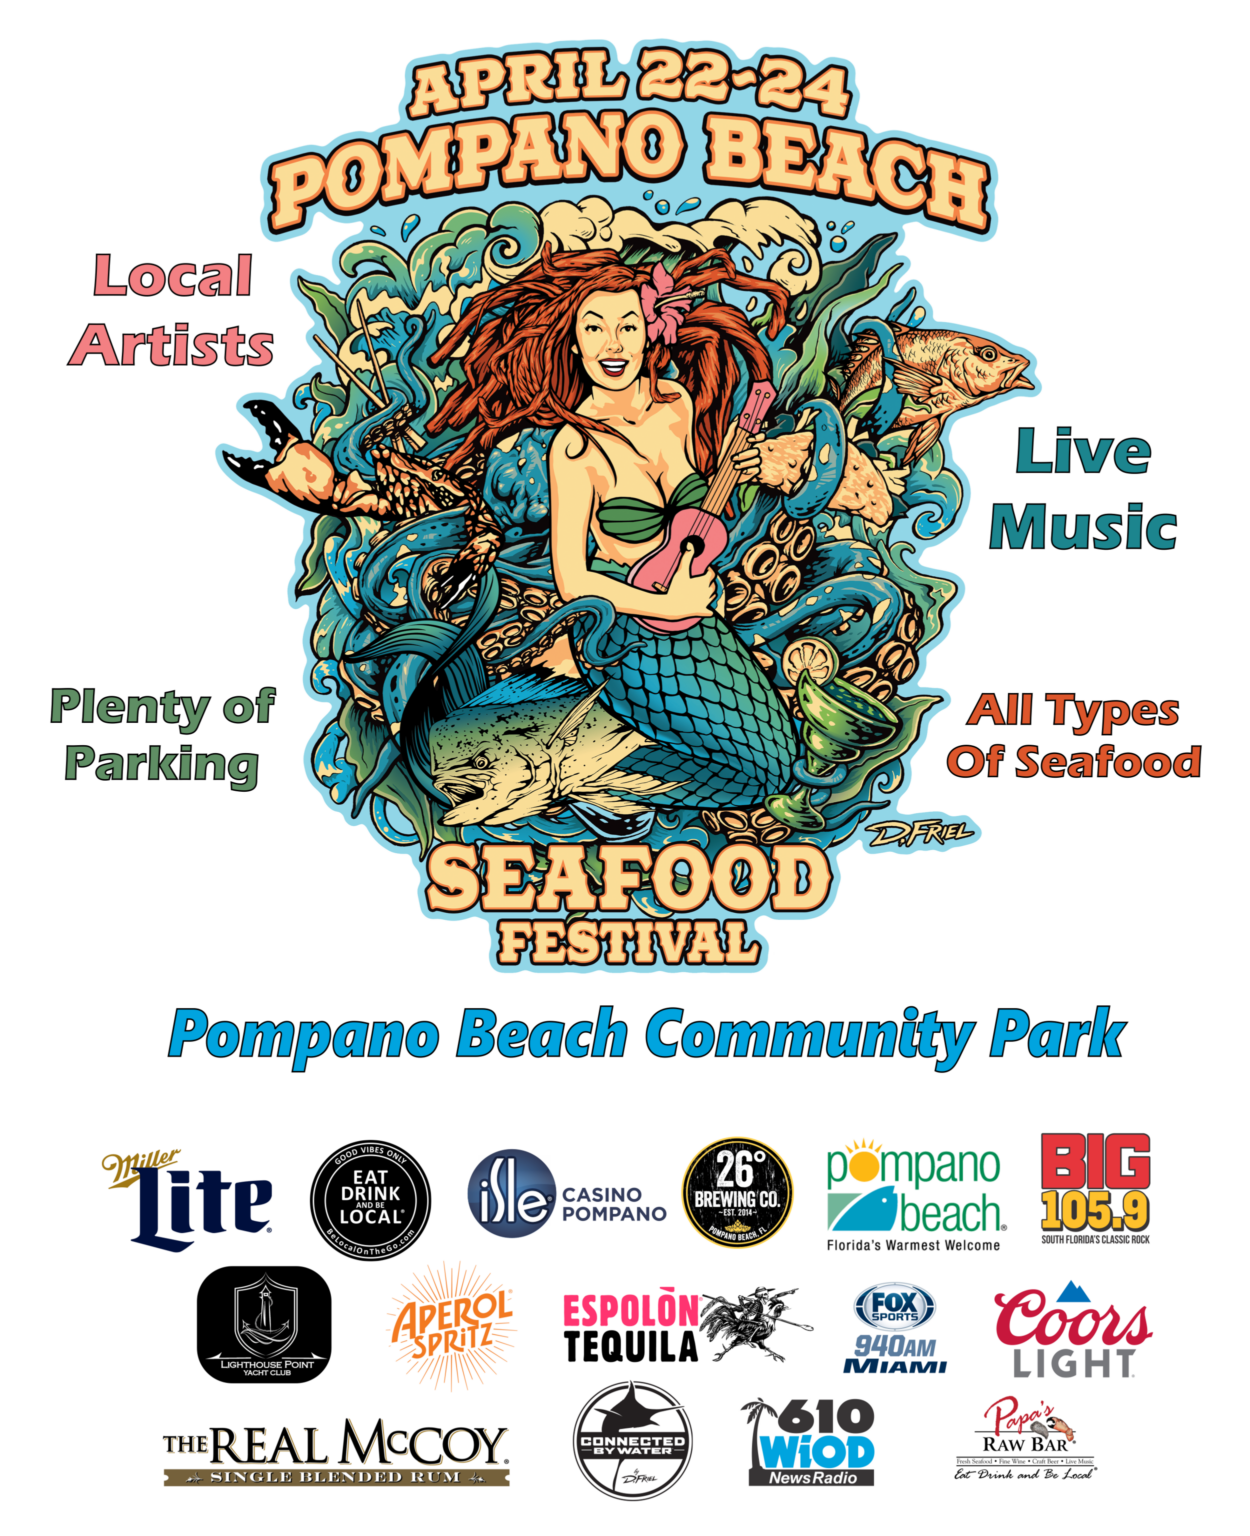 Pompano Beach Seafood Festival (Pompano Beach Community Park Pompano